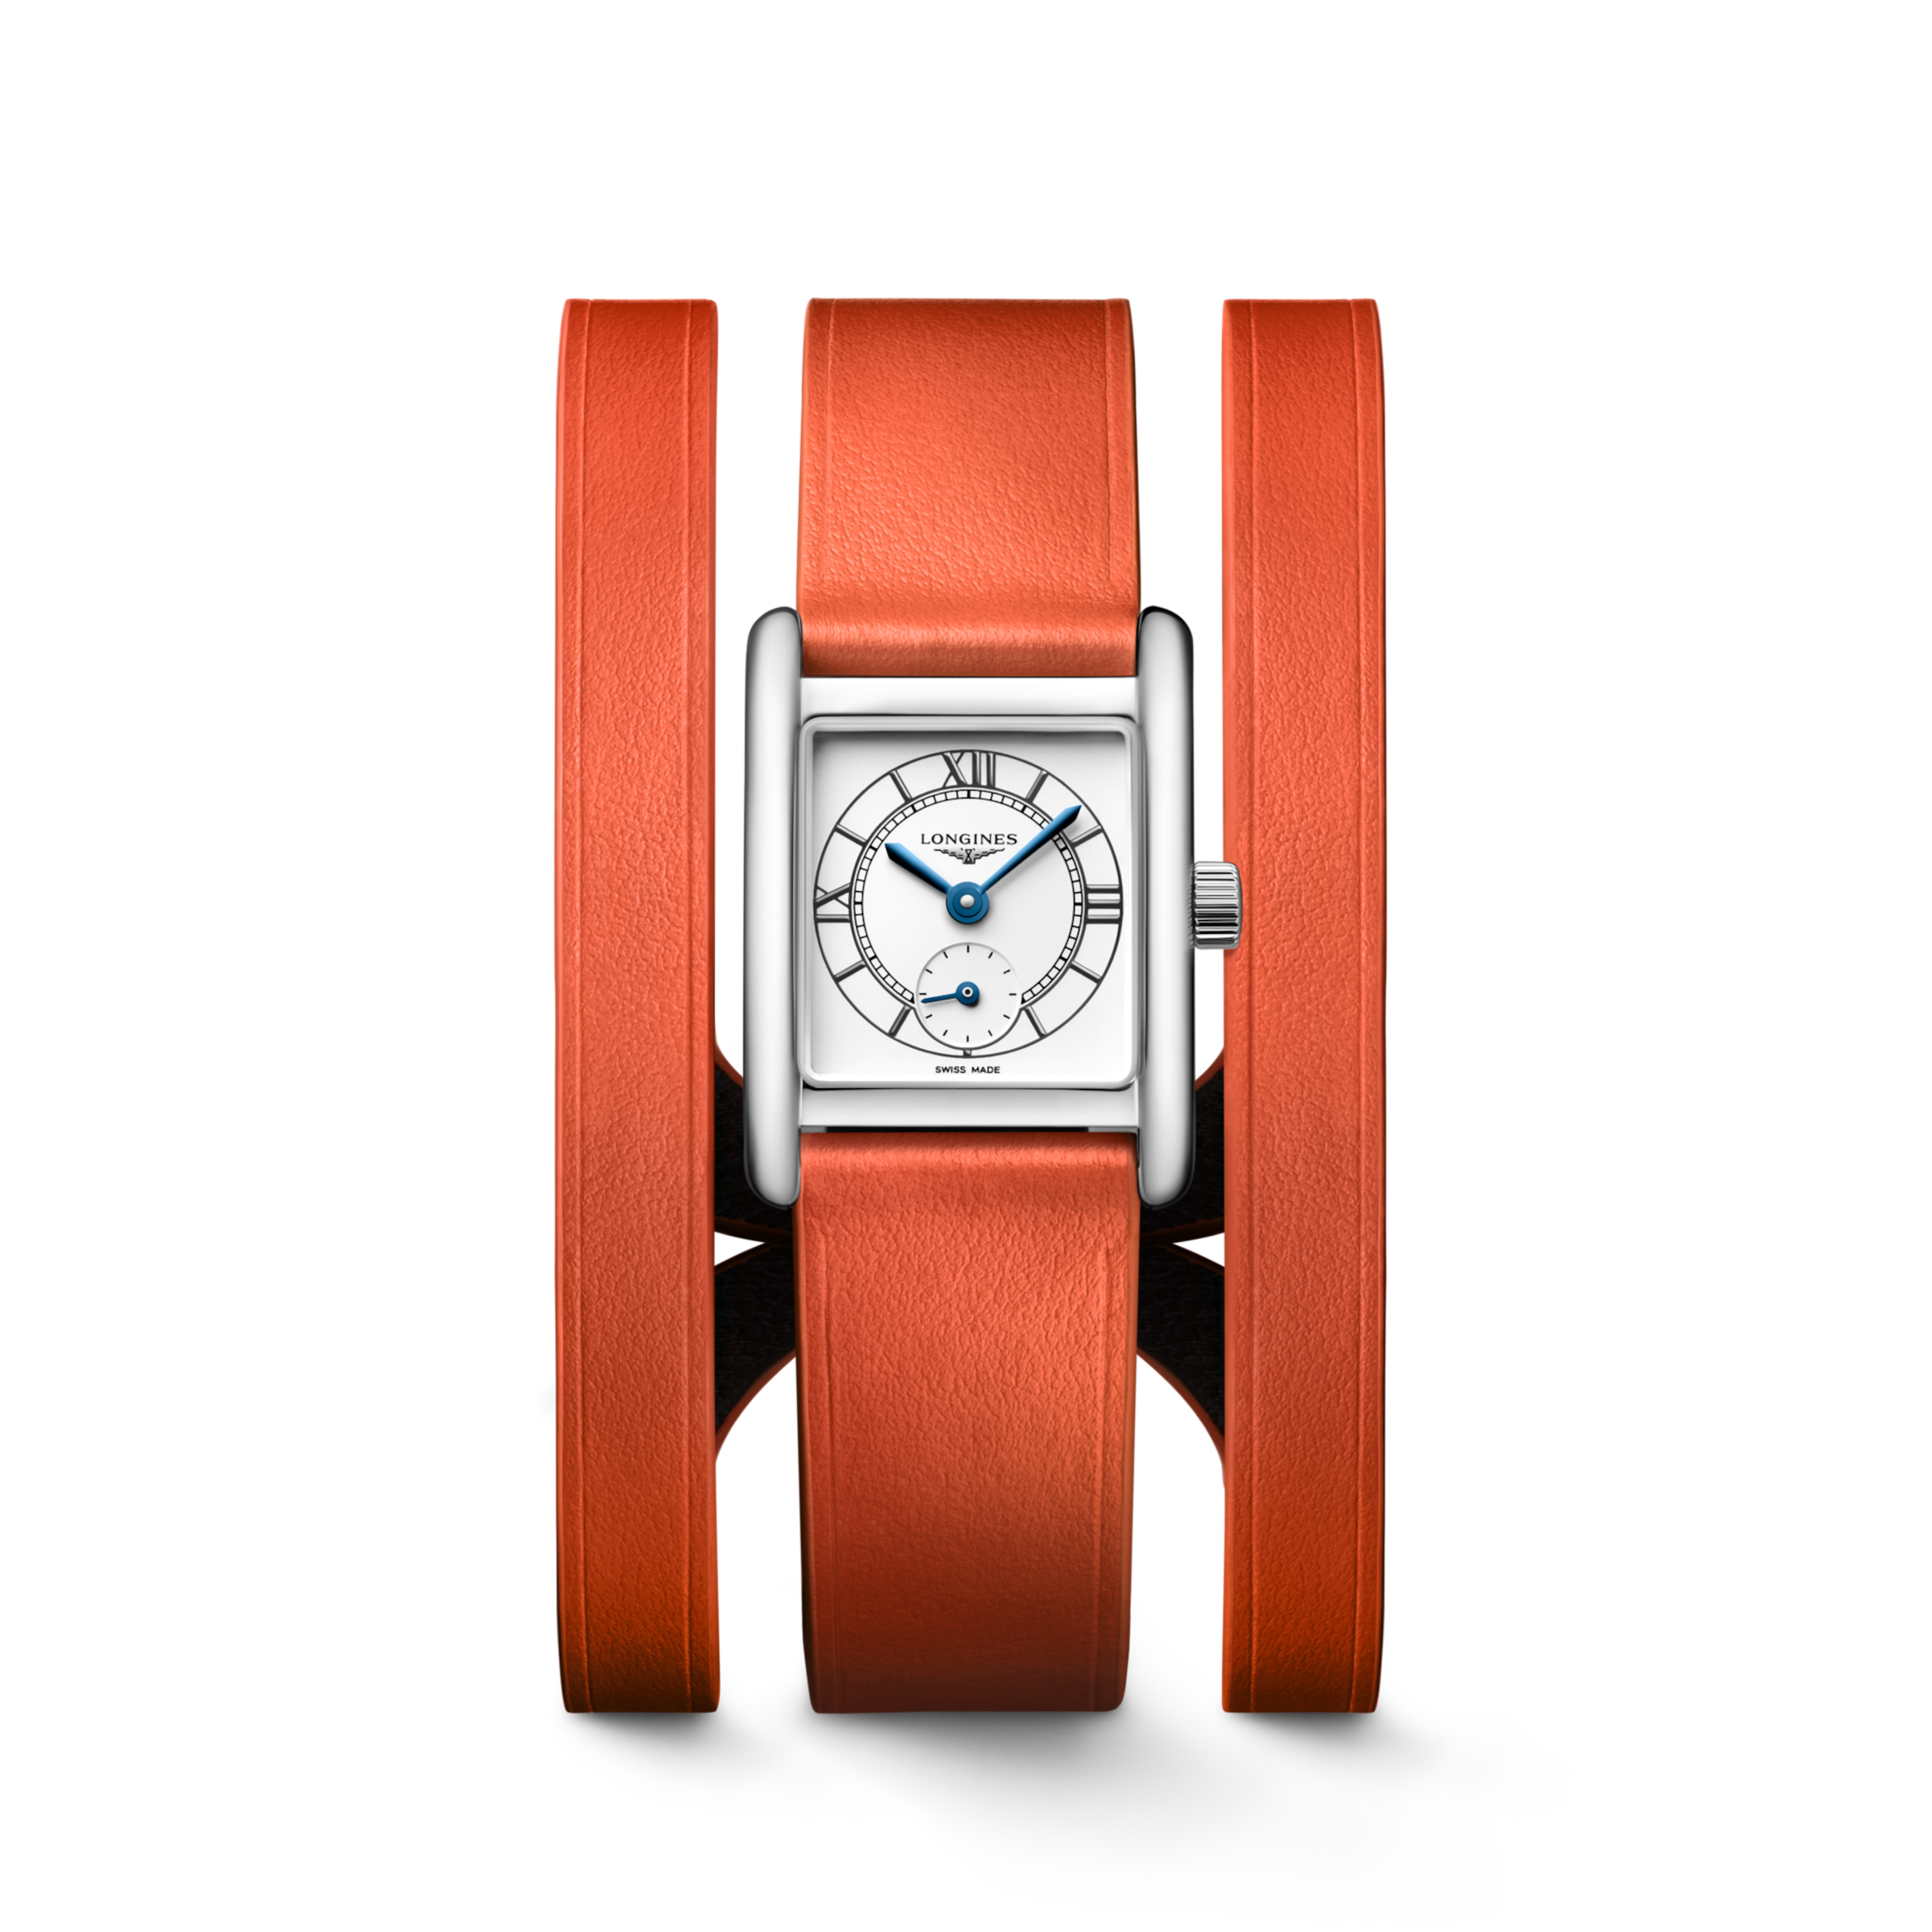 Longines MINI DOLCEVITA Quartz Stainless steel Watch - L5.200.4.75.8